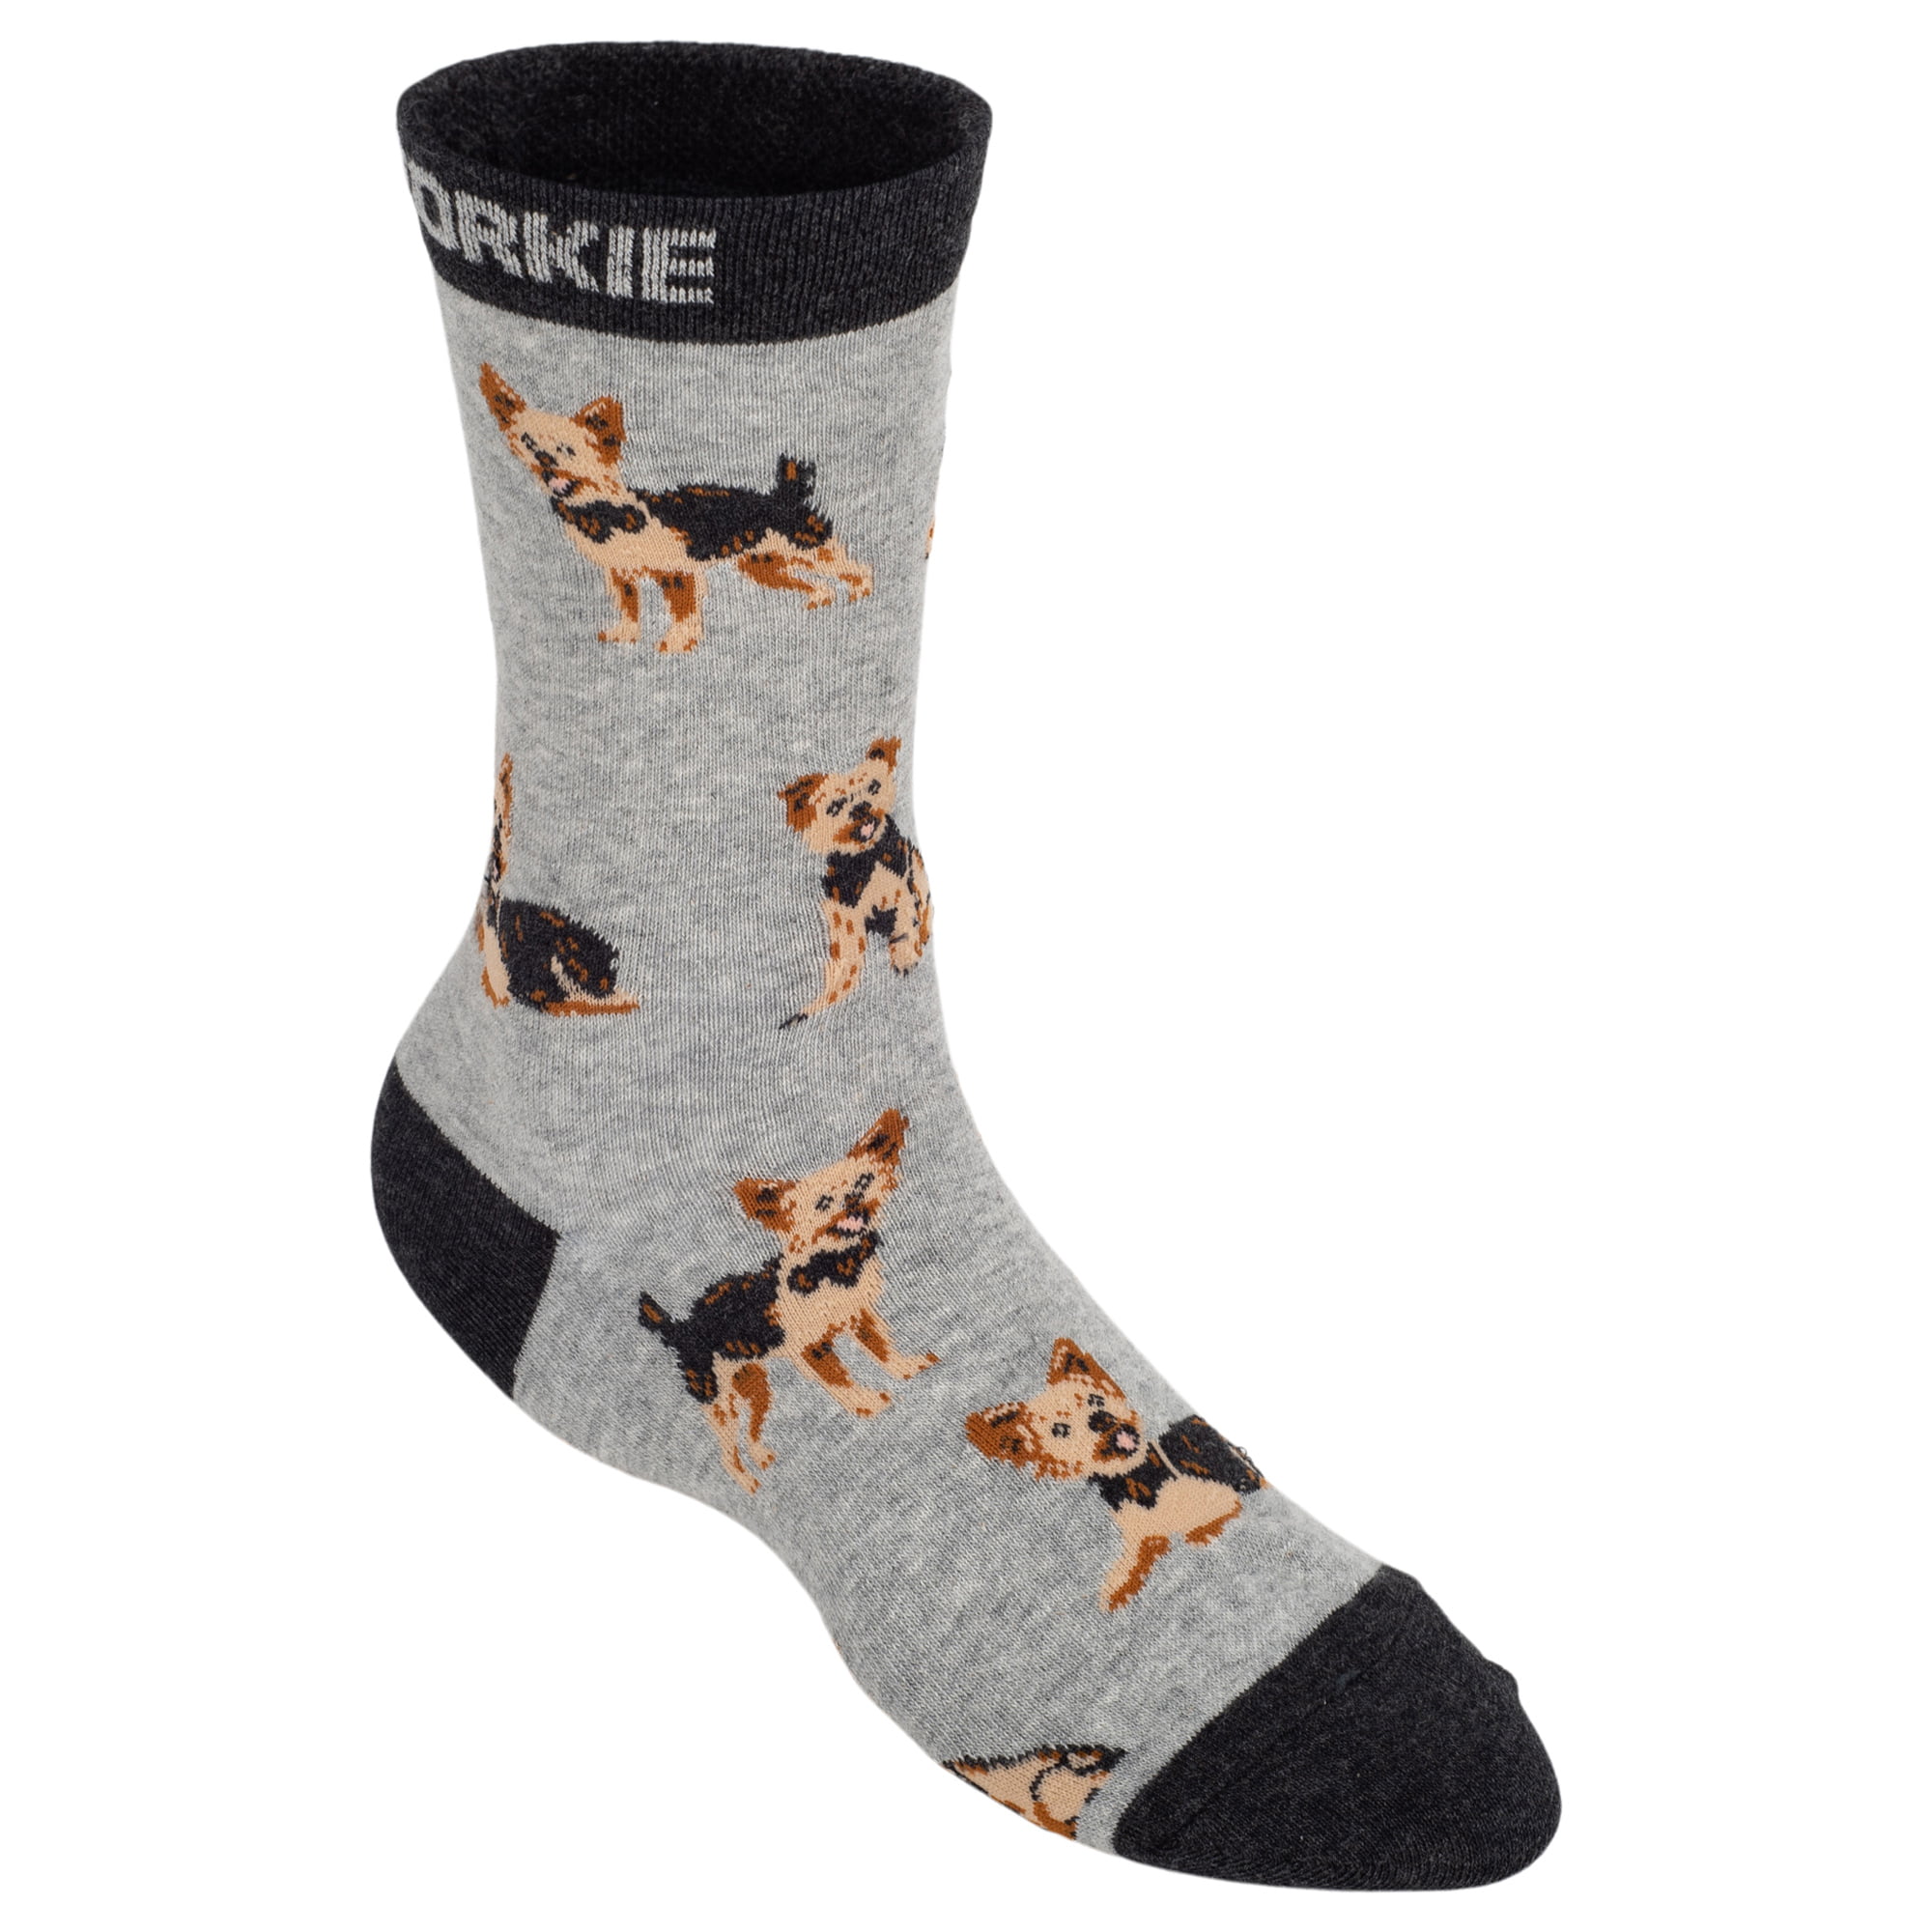 Adult Socks YORKIE YORKSHIRE PosesFashion Footwear Dog Socks Size Medium 6-11 